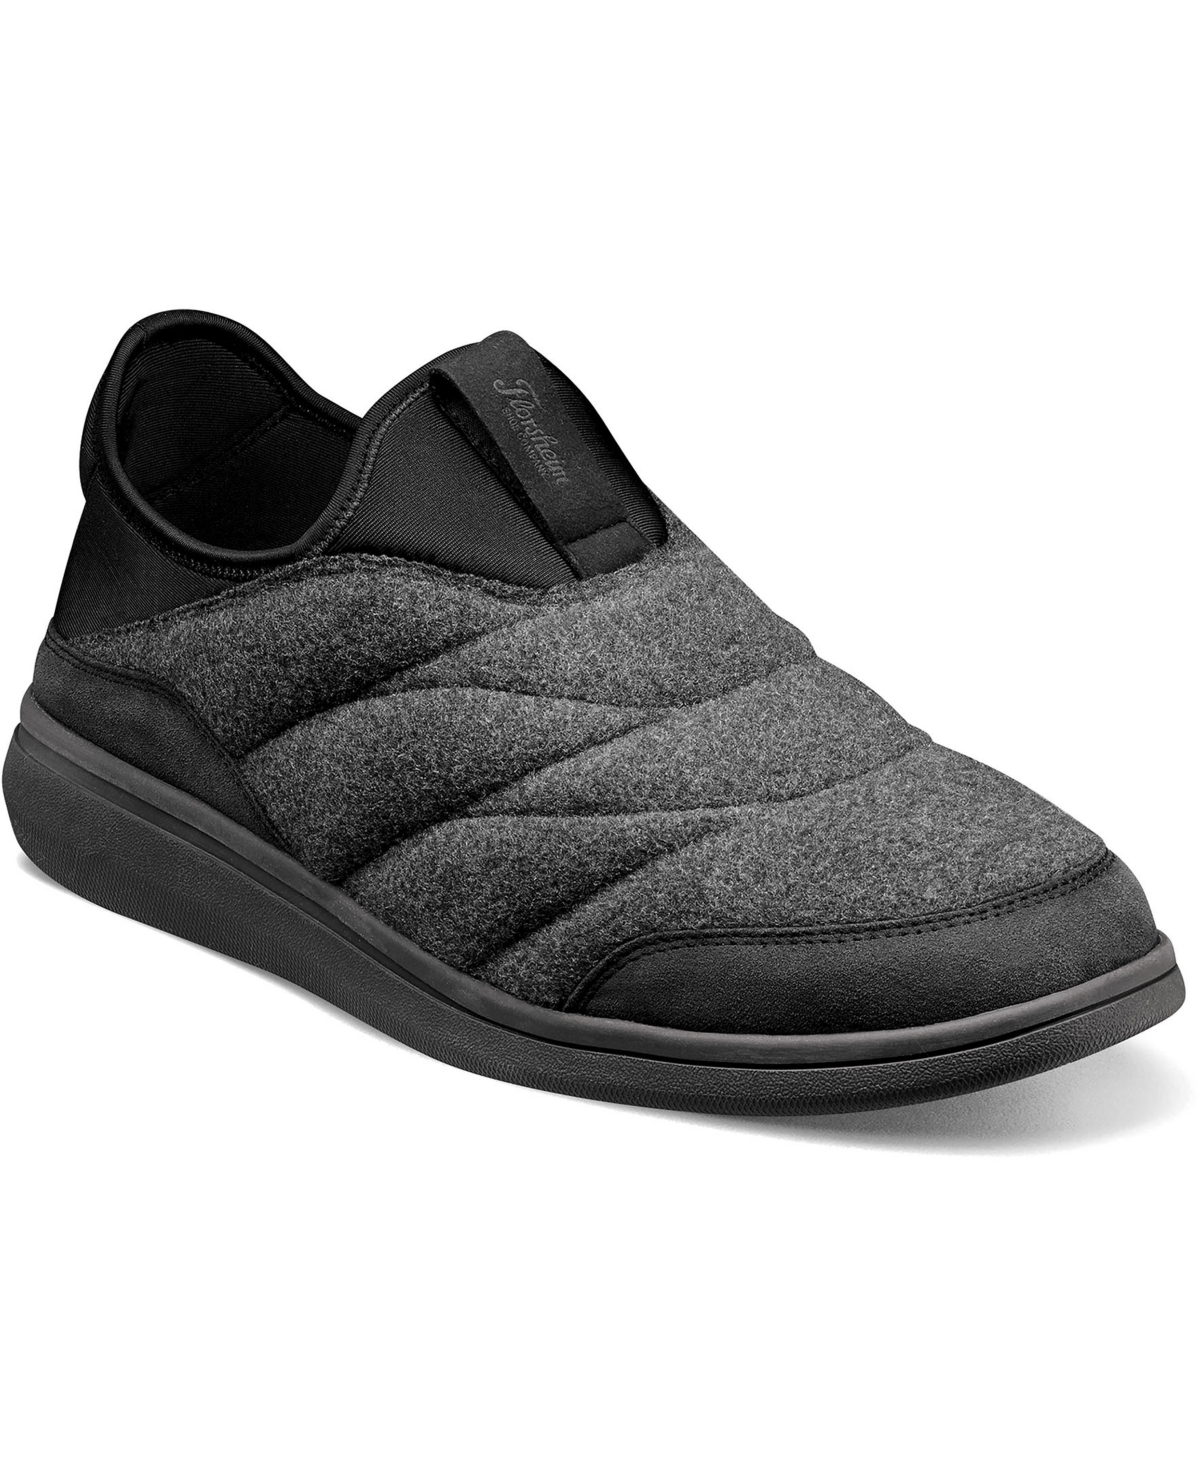 Men's Java Wool Moc Slip-On Shoes - Charcoal